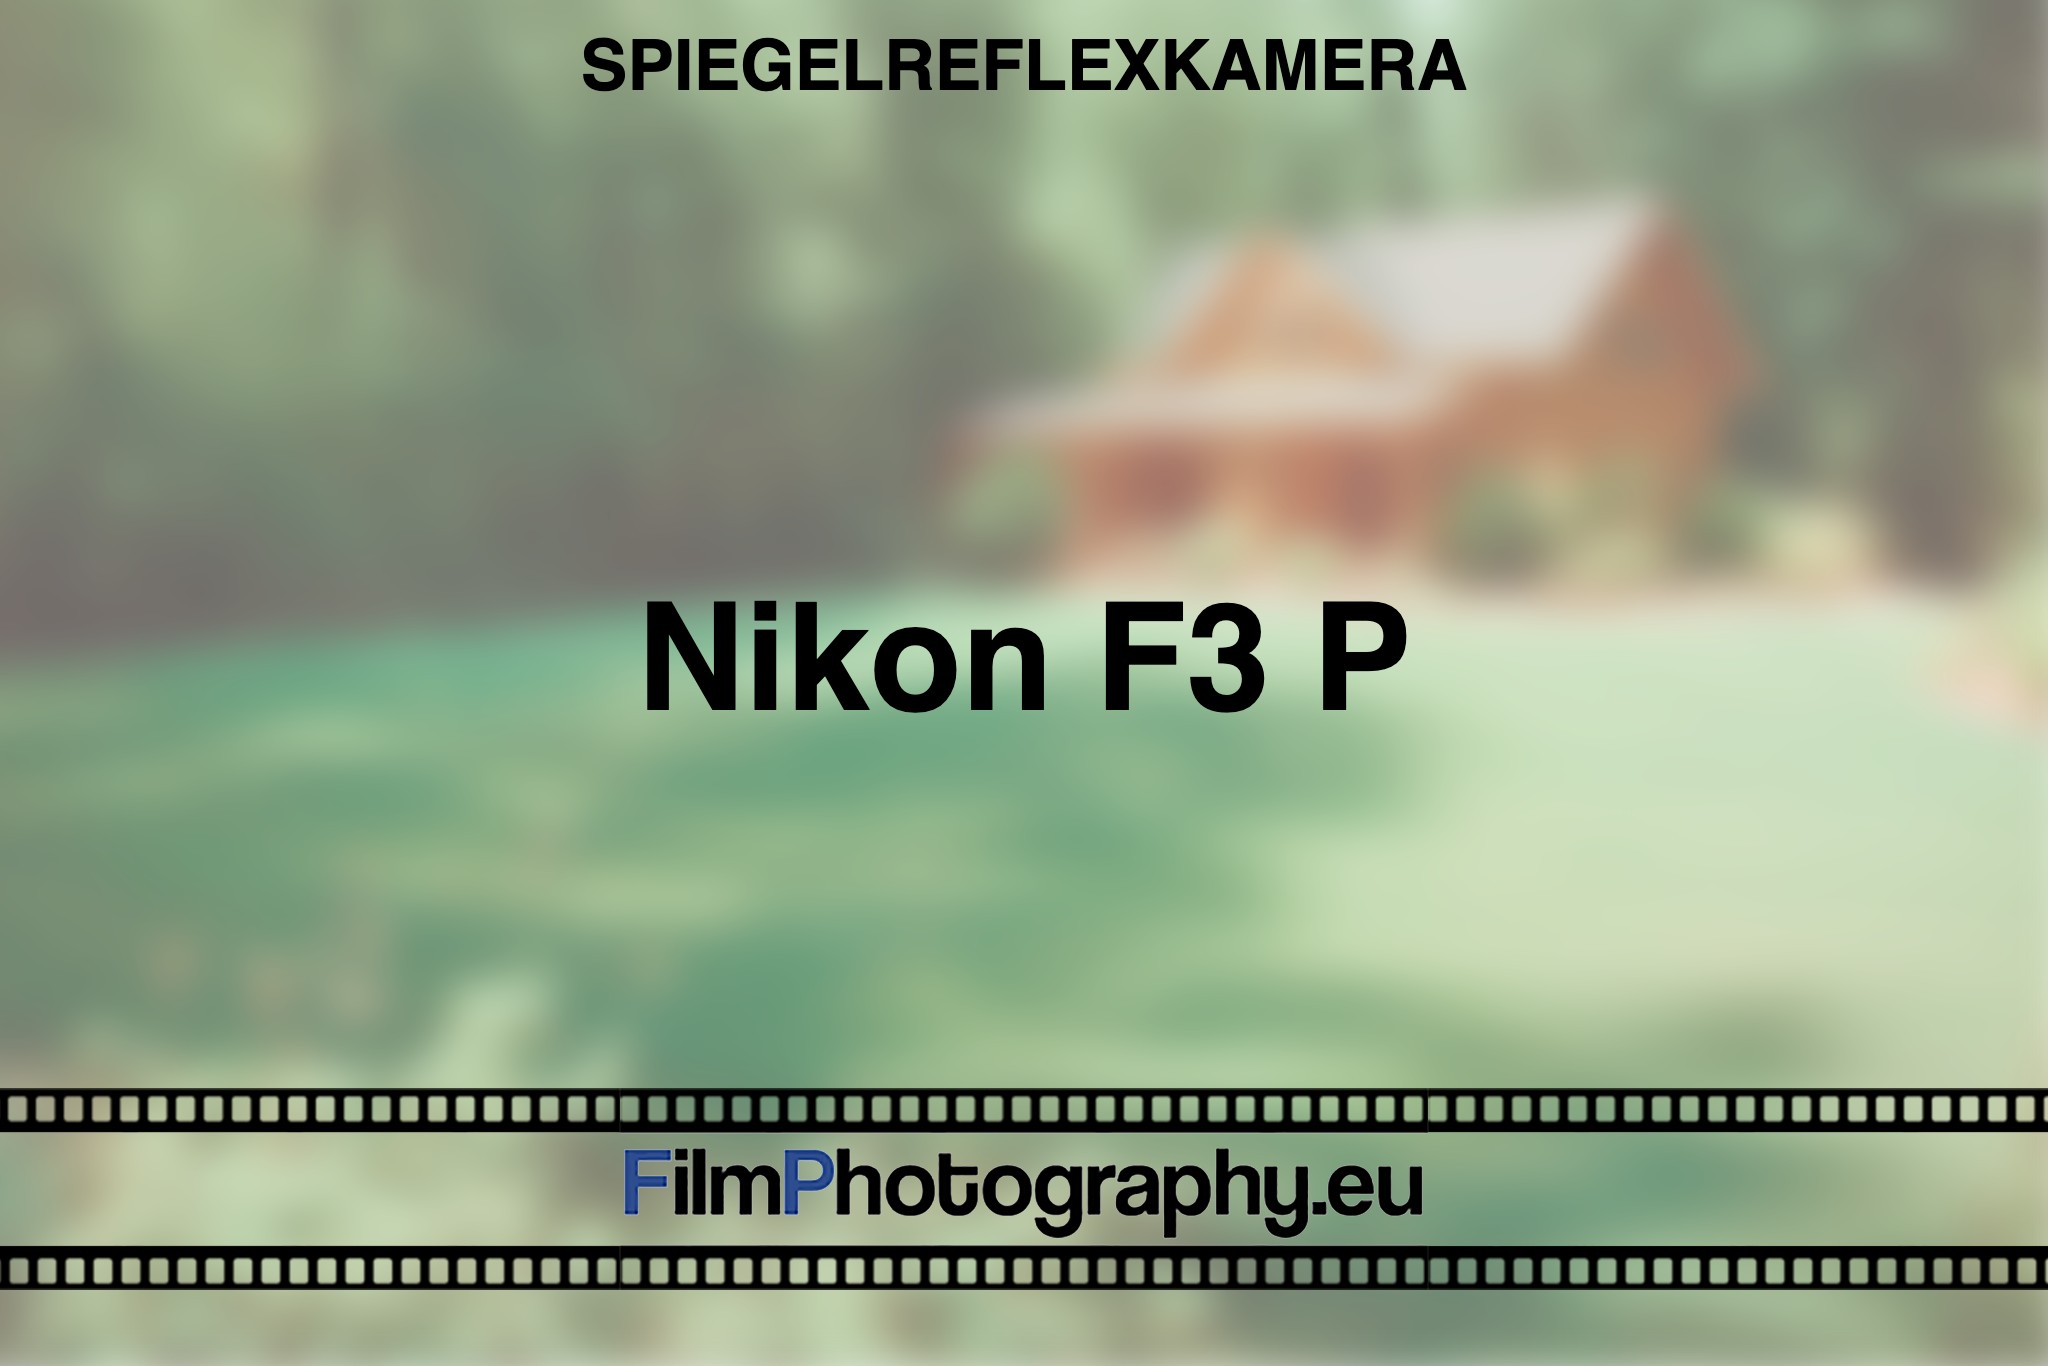 nikon-f3-p-spiegelreflexkamera-bnv